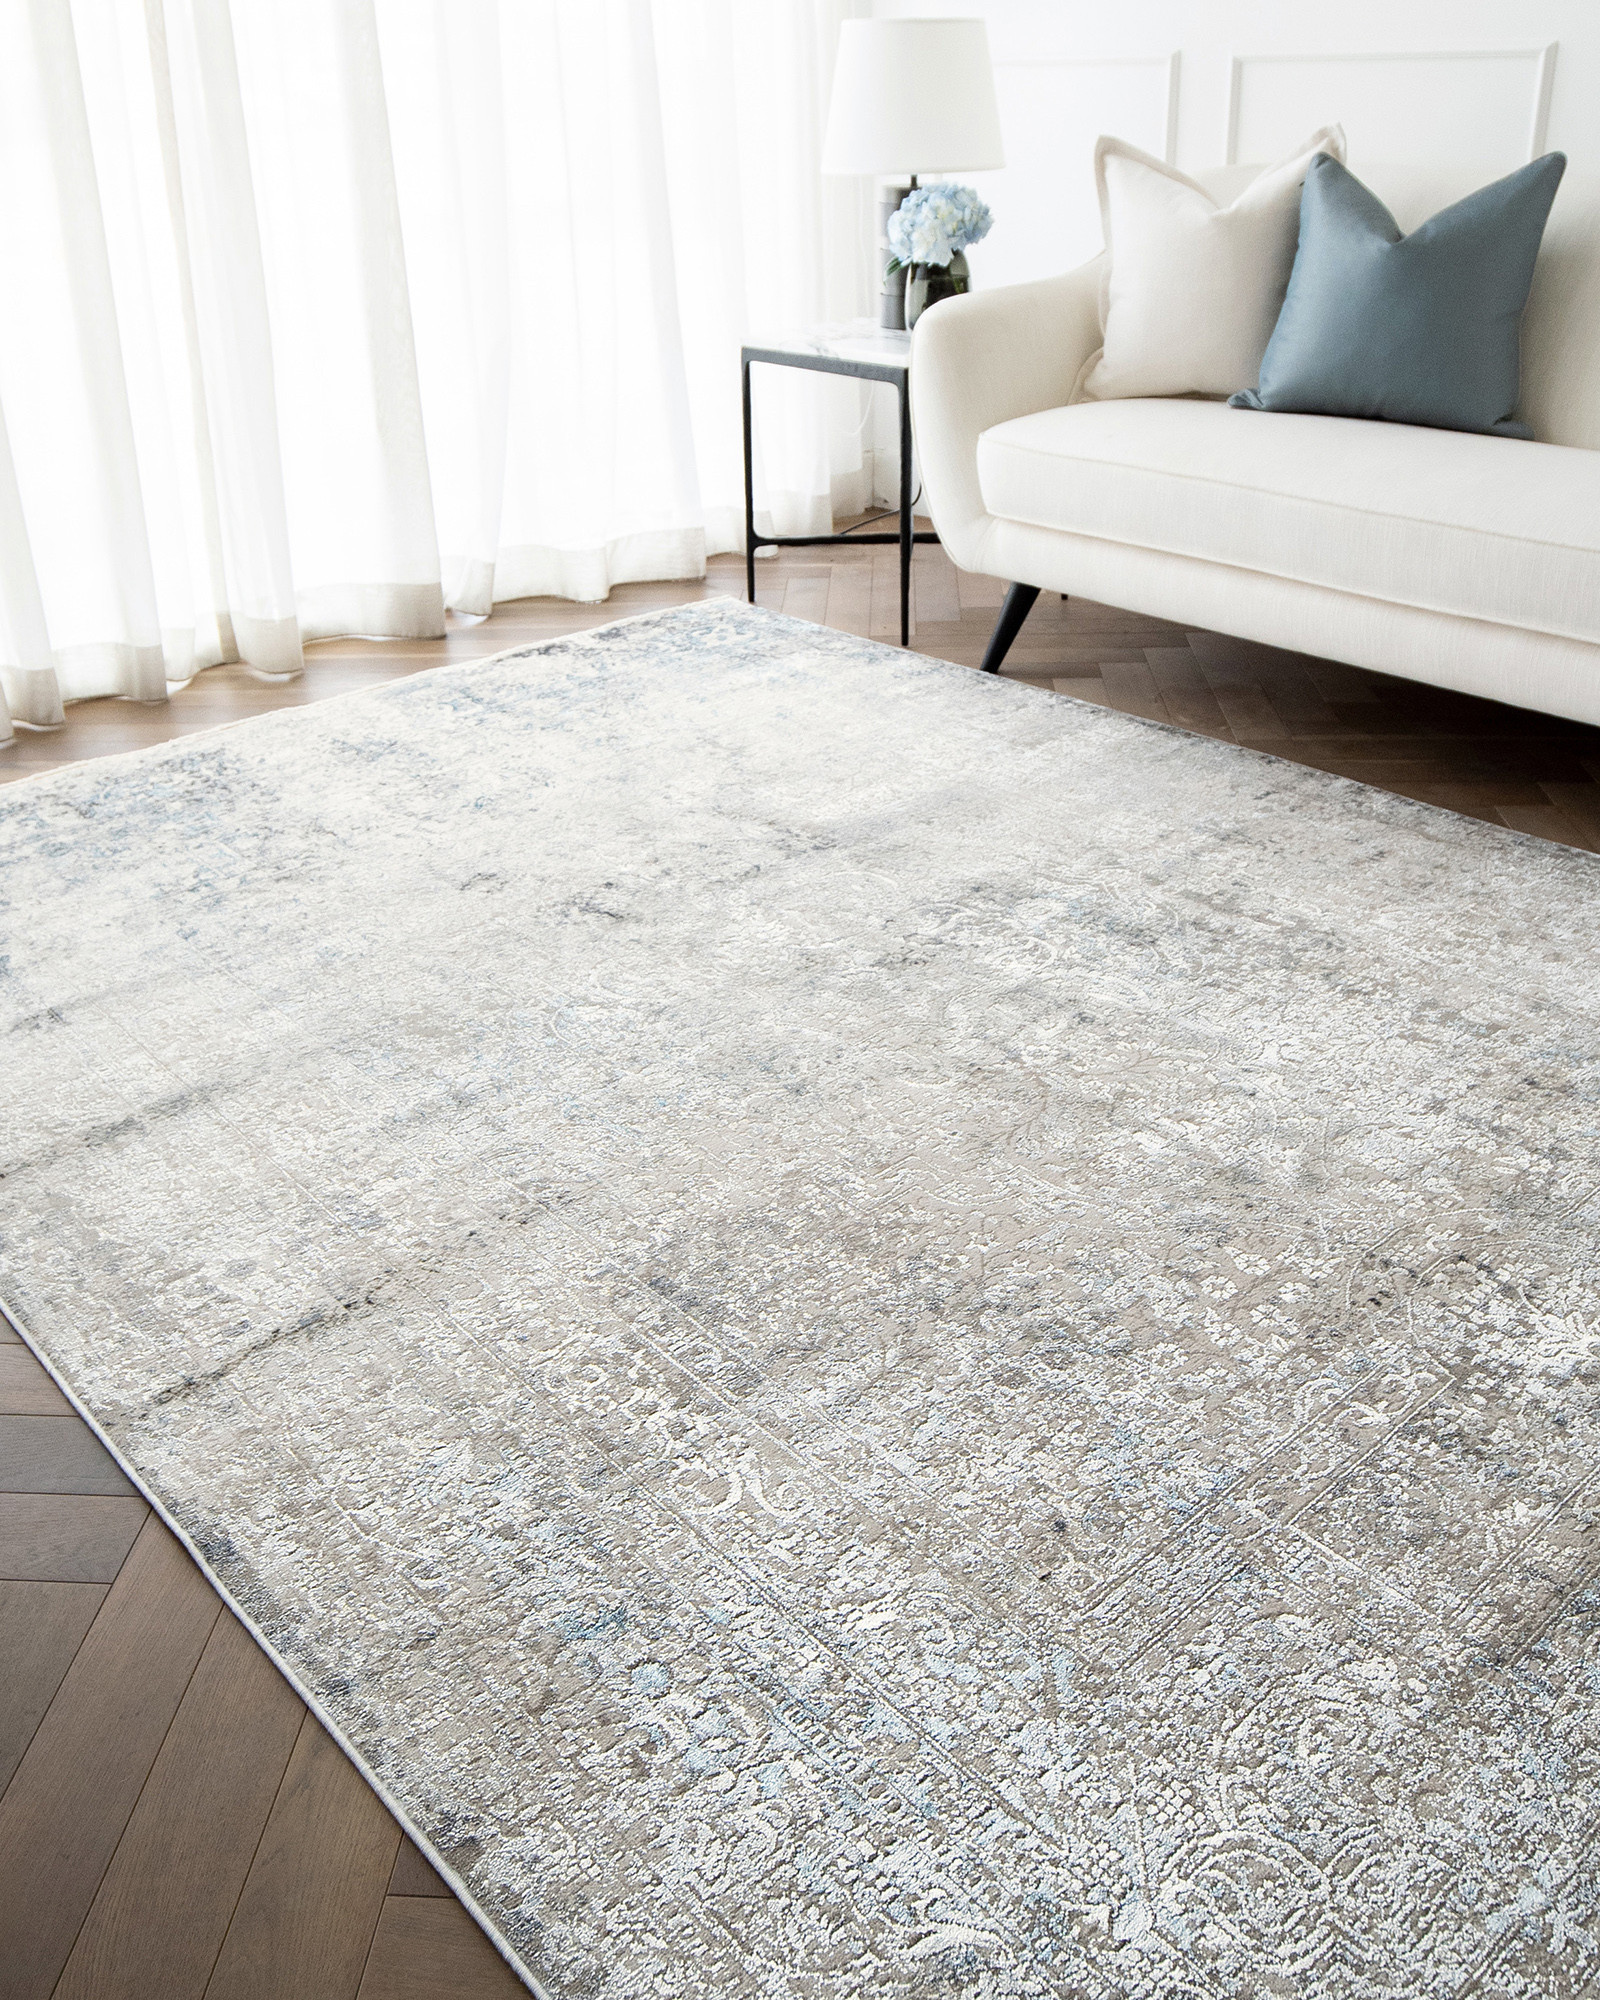 Jacob Azure 500 x 300 cm Carpet Knot Home Designer Rug for Bedroom Living Dining Room Office Soft Non-slip Area Textile Decor